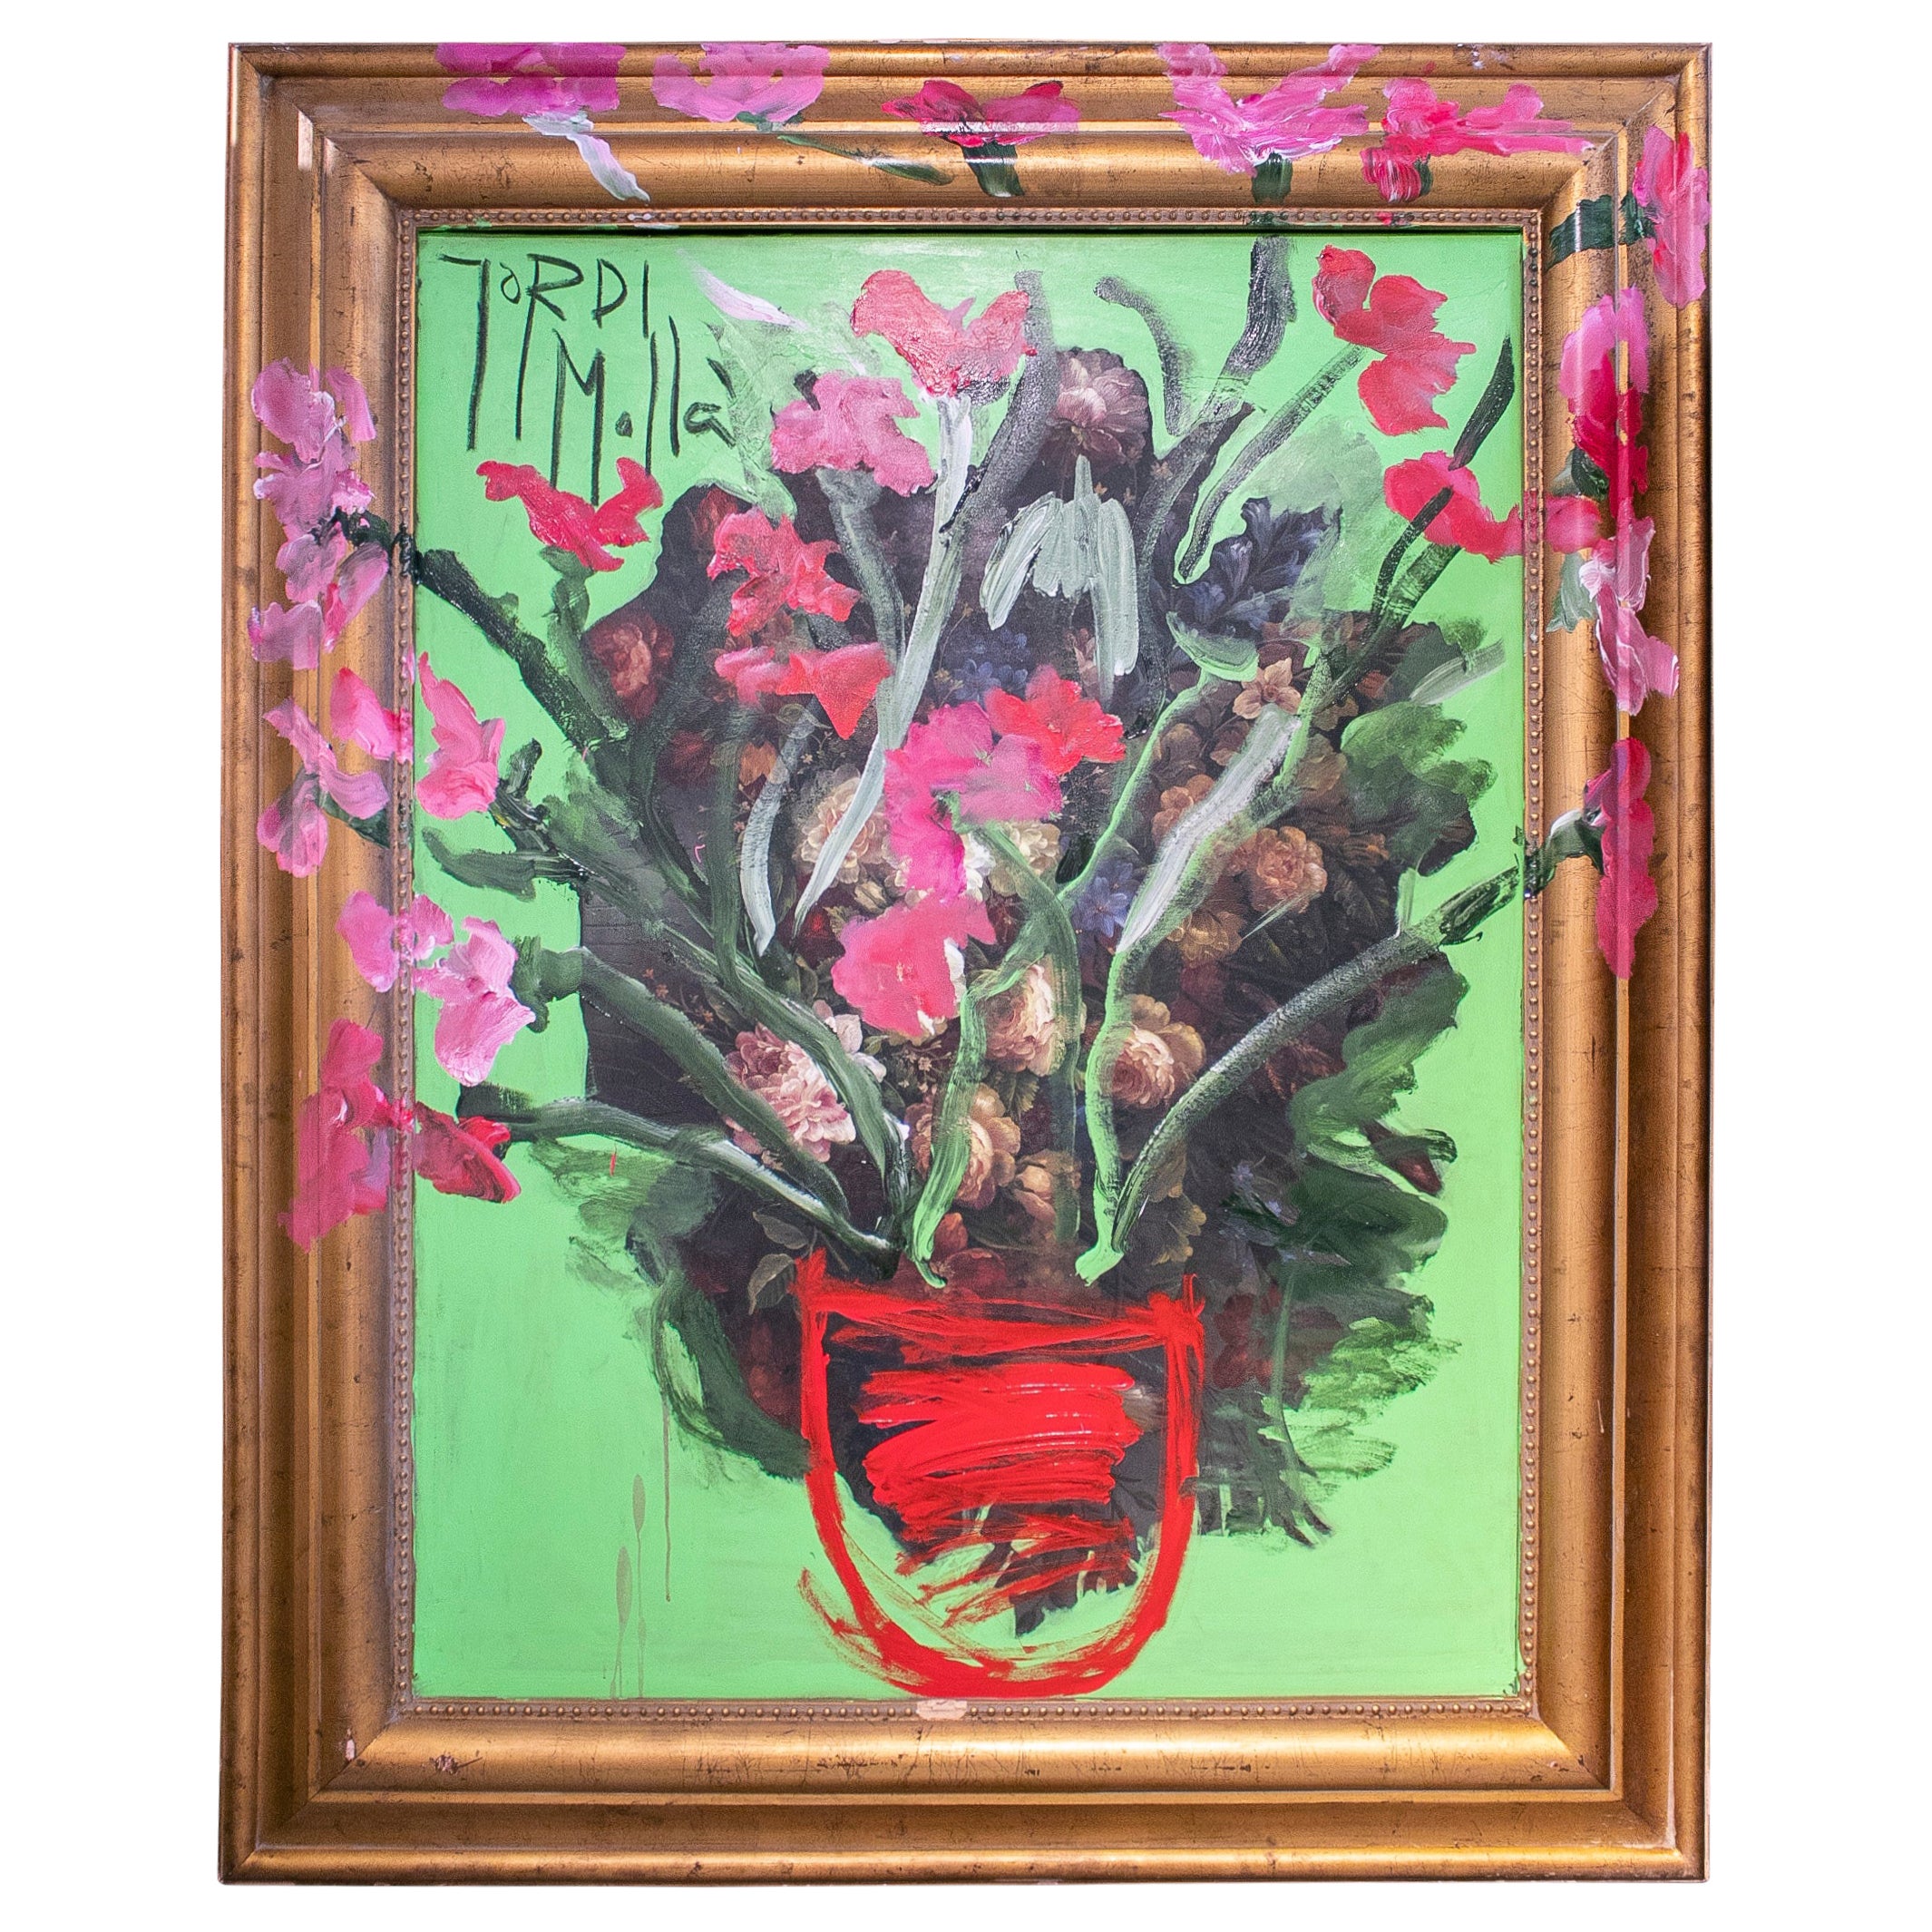 Jordi Mollá, 2021 "Flower Power" Marbella Series Oil Painting For Sale